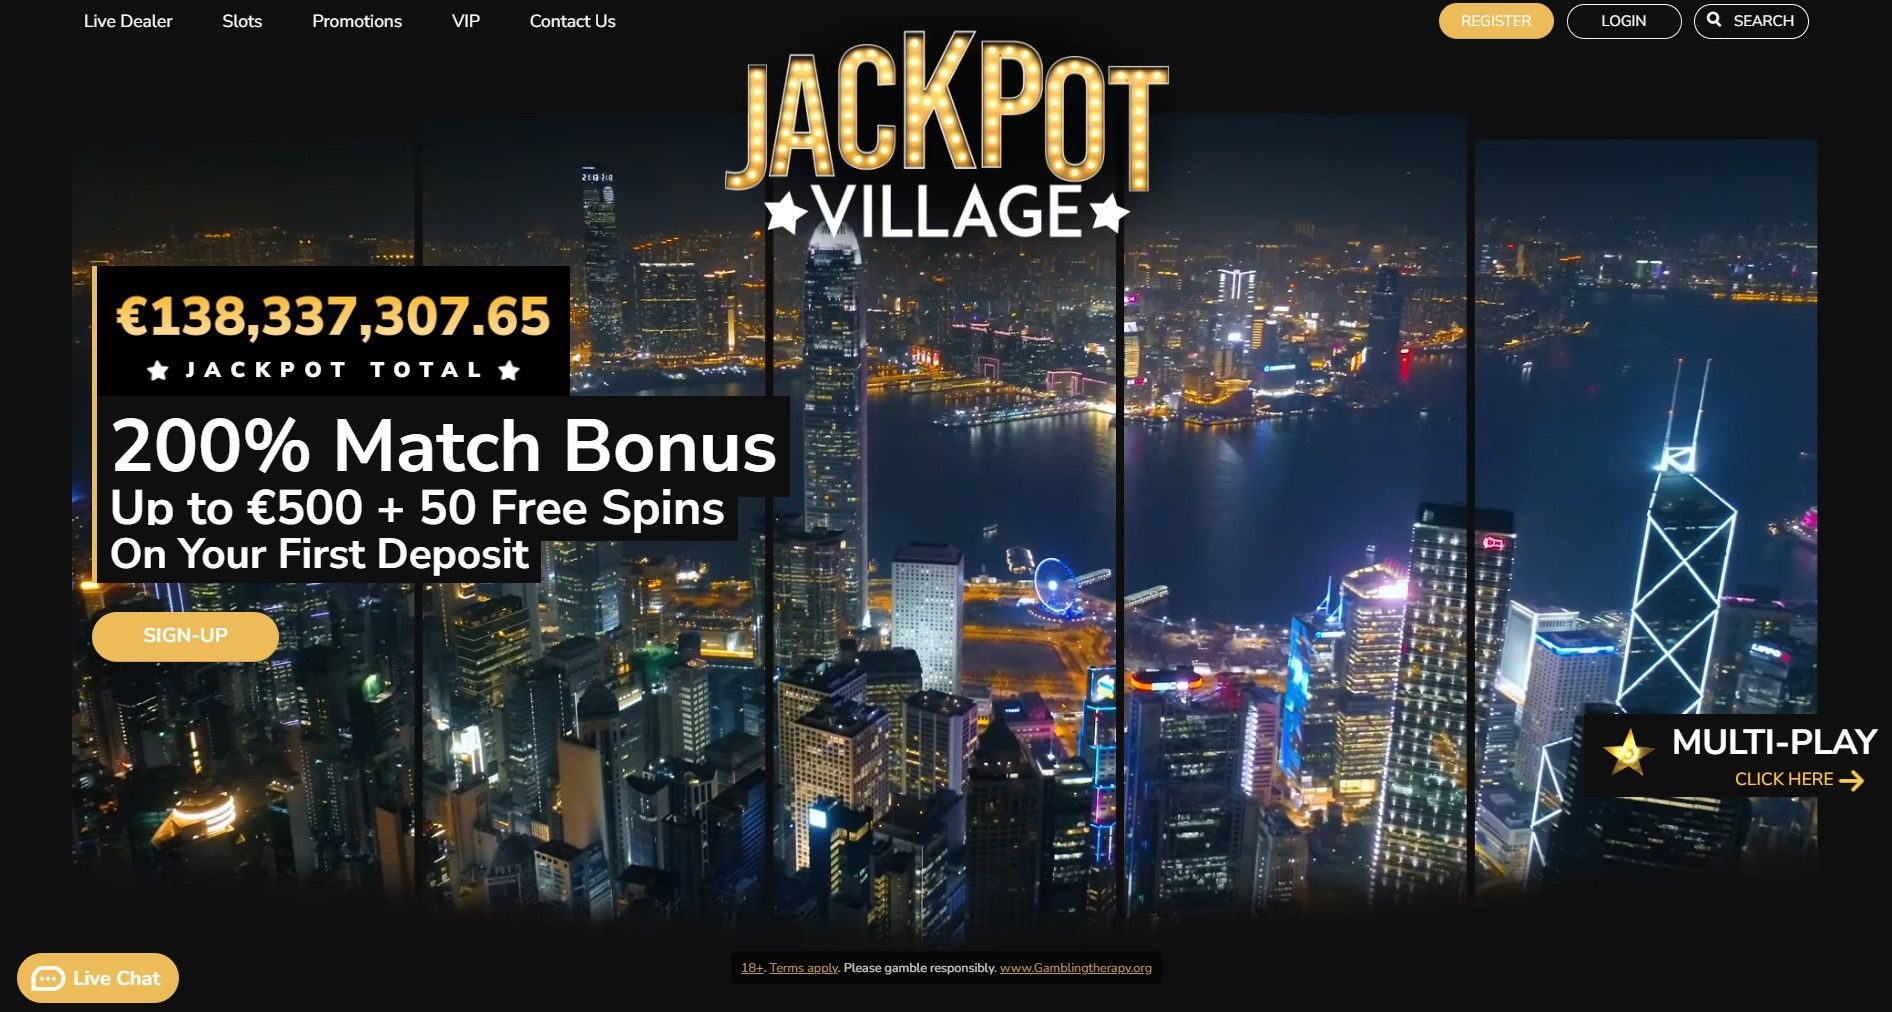 jackpot village online casino Offer from Go Gambling